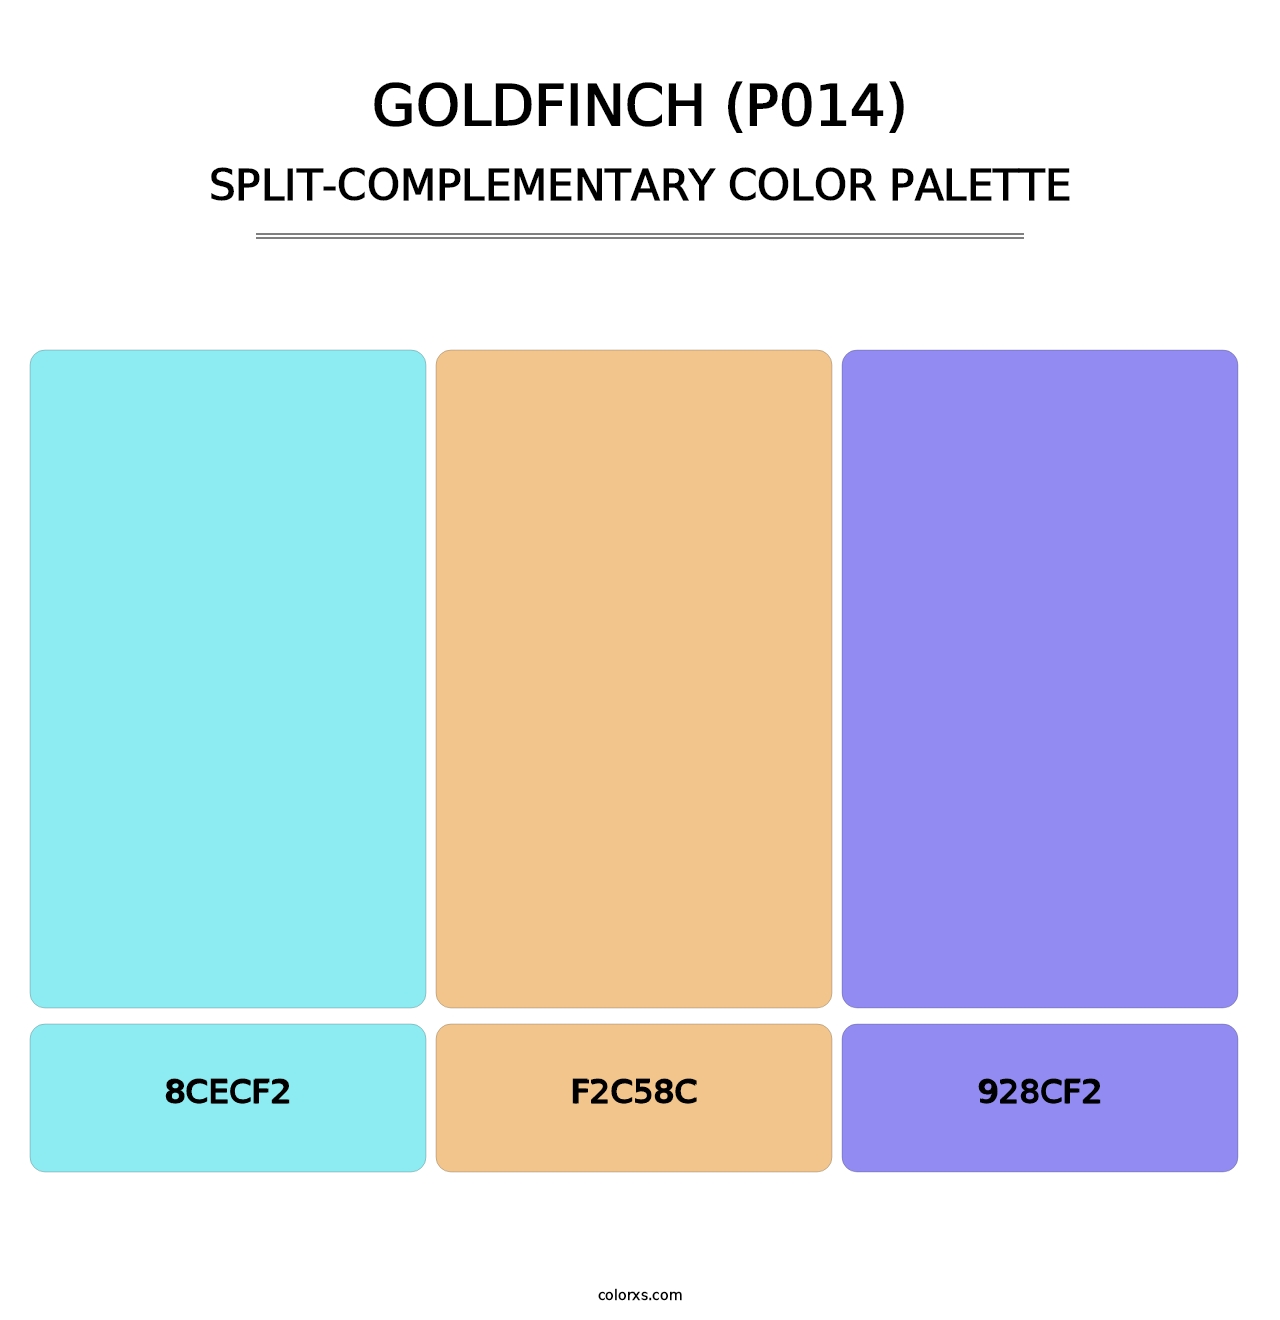 Goldfinch (P014) - Split-Complementary Color Palette